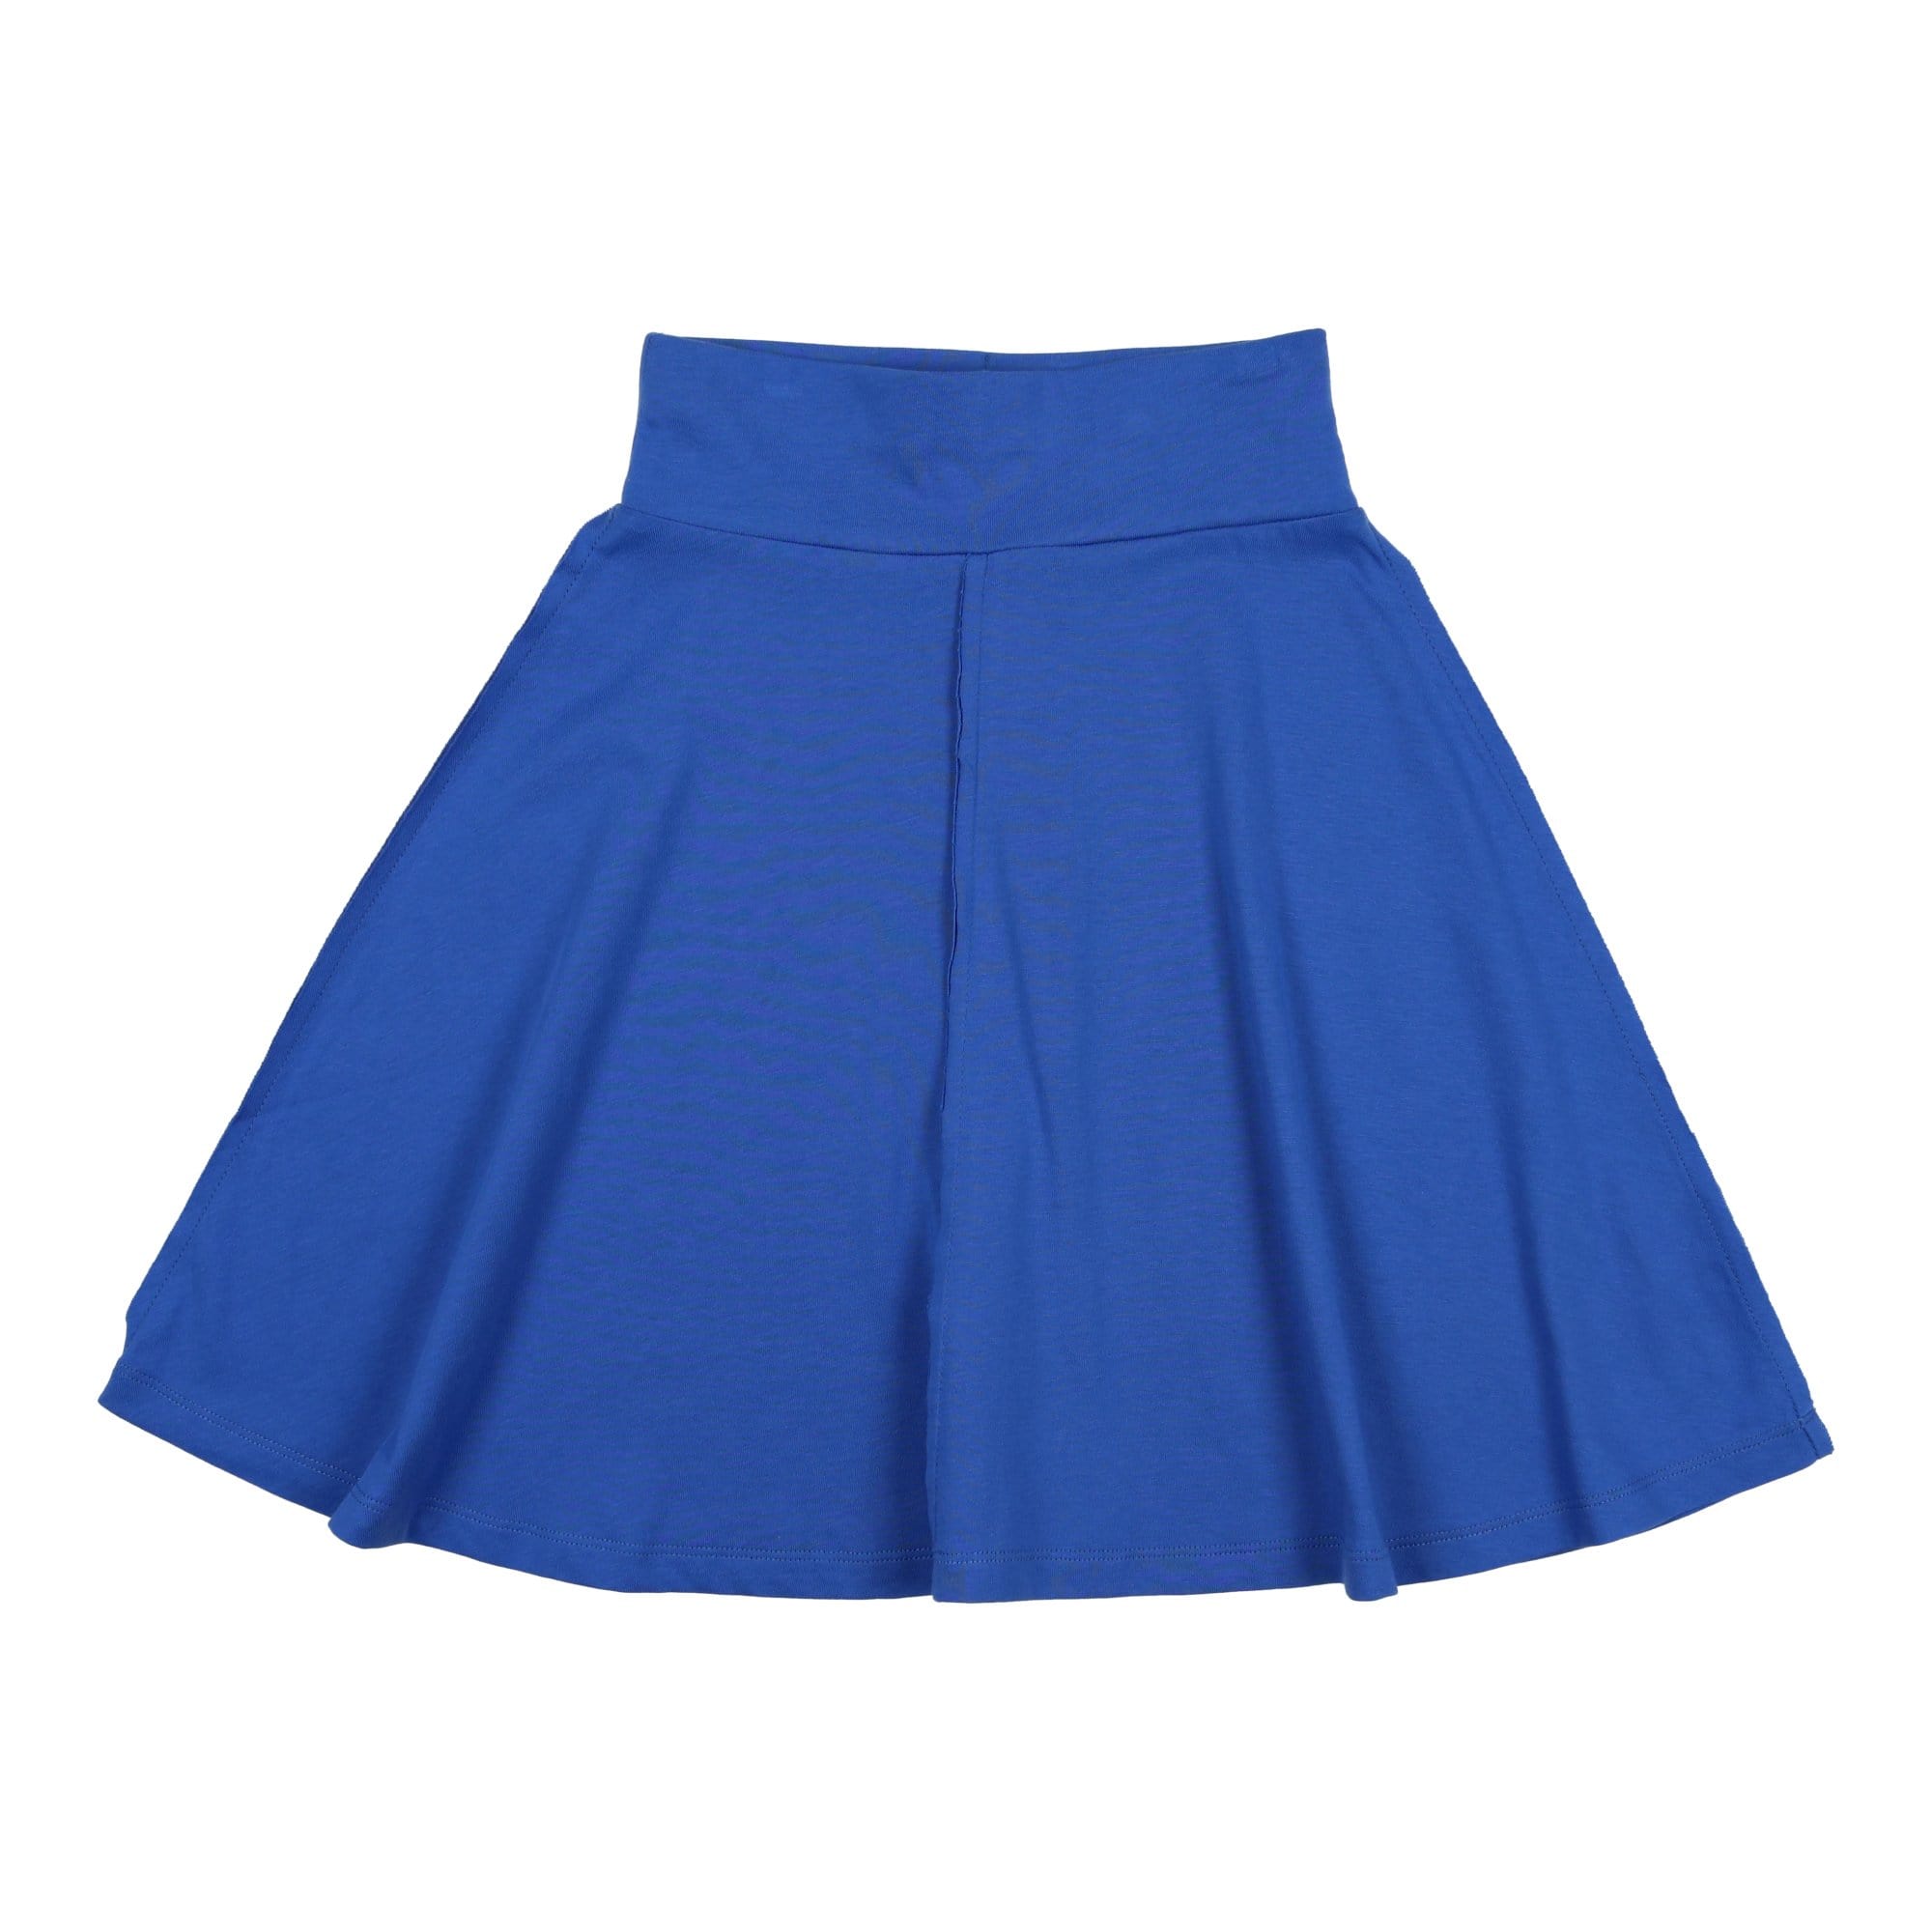 Cobalt Blue Circle Skirt